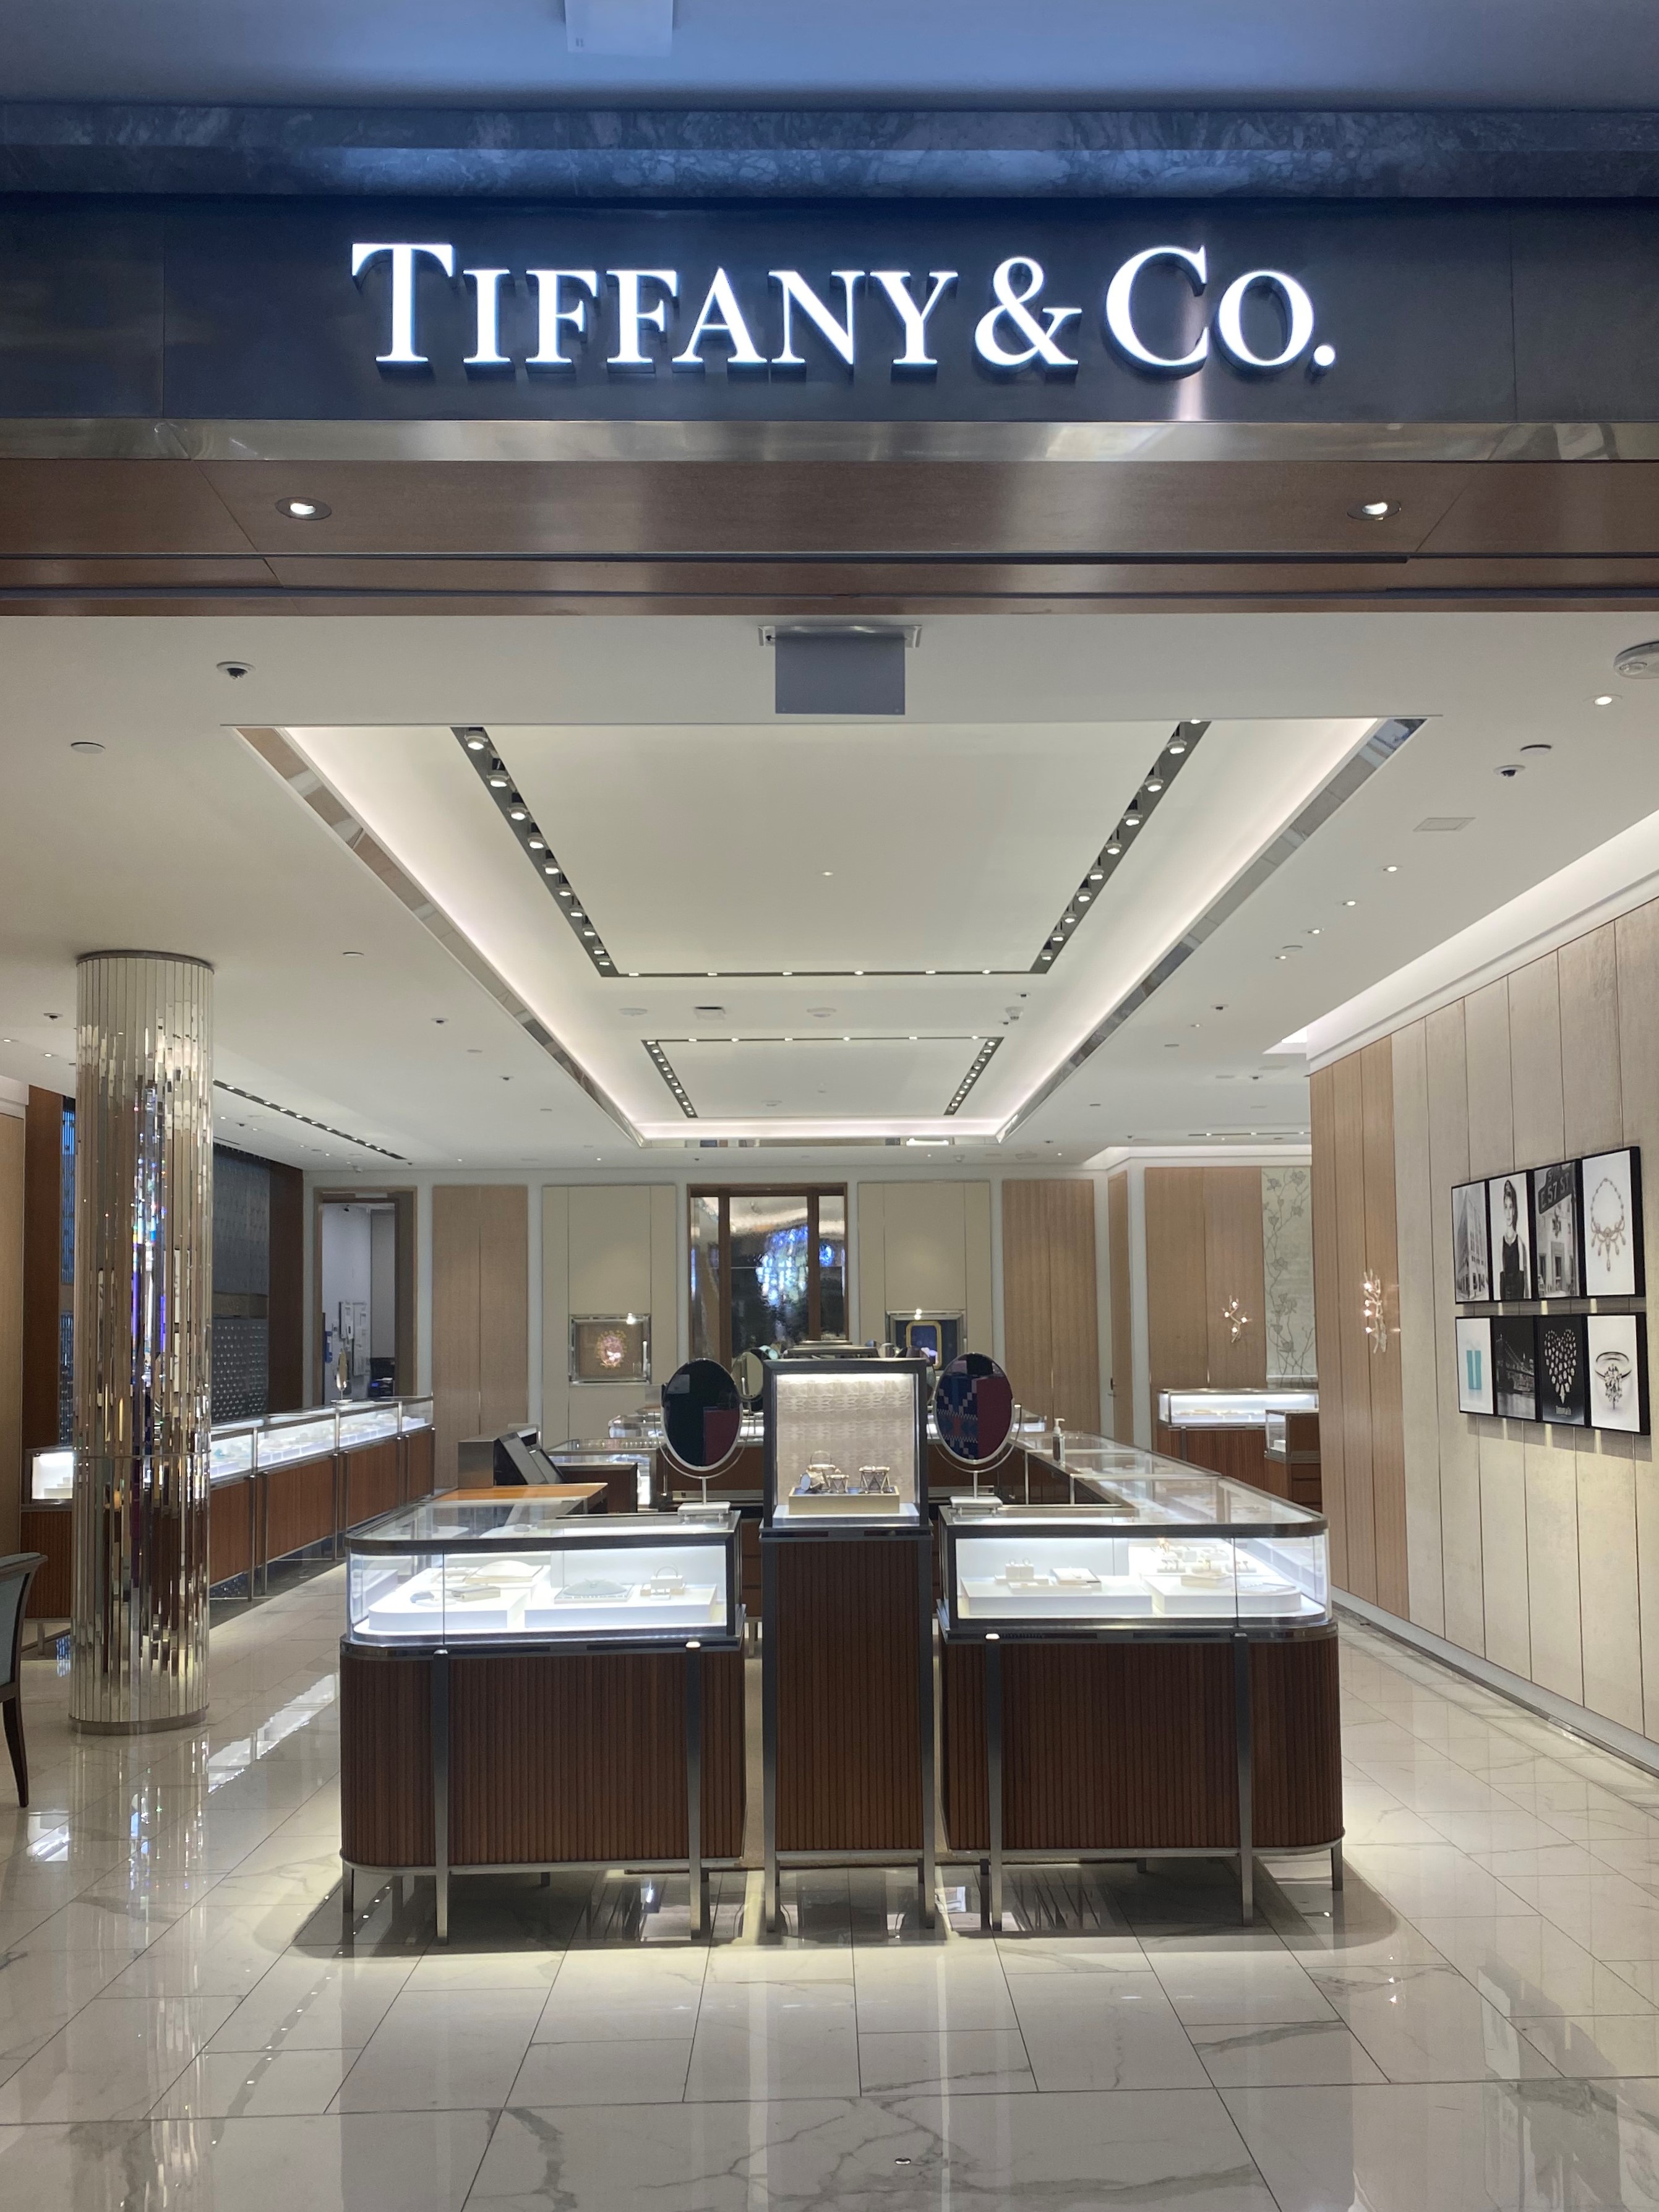 Tiffany & Co. Mississauga (905)897-4359